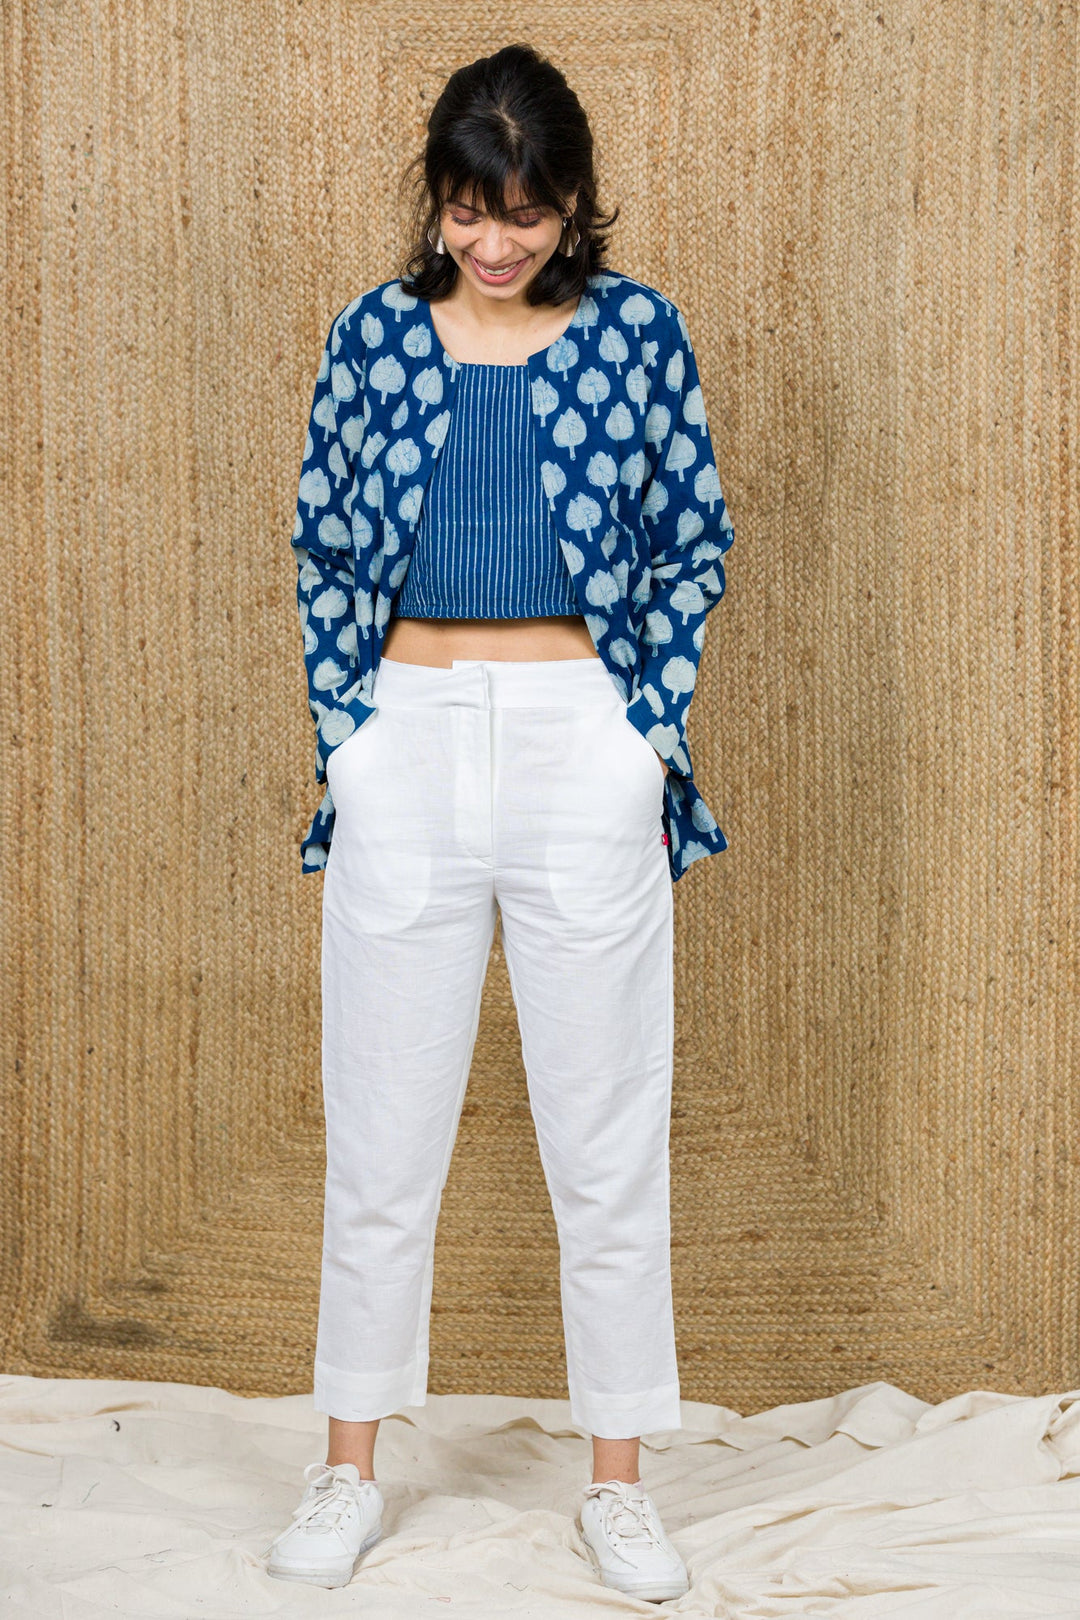 Indigo Hand Block Print Reversible Jacket With Crop Top And Linen Pants - womenswear - 1038/W/JCTP/ILP